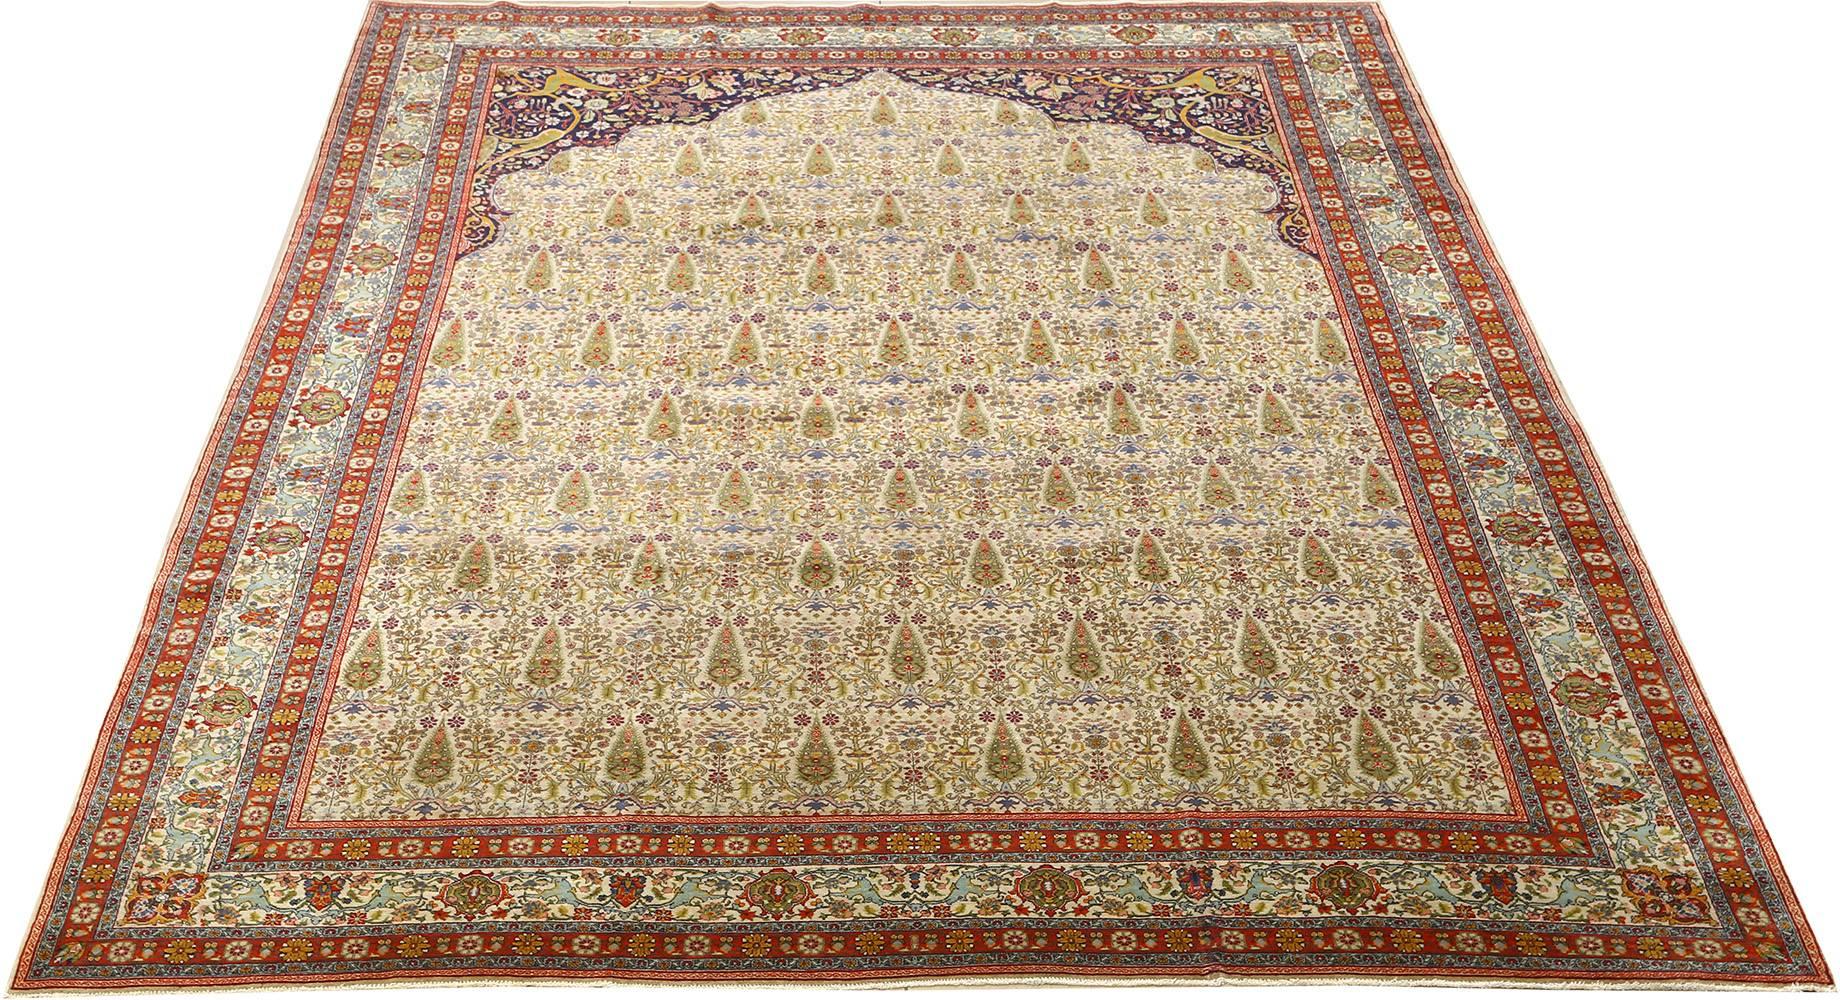 20th Century Nazmiyal Antique Prayer Design Tabriz Persian Rug. Size: 8 ft 1 in x 9 ft 10 in 